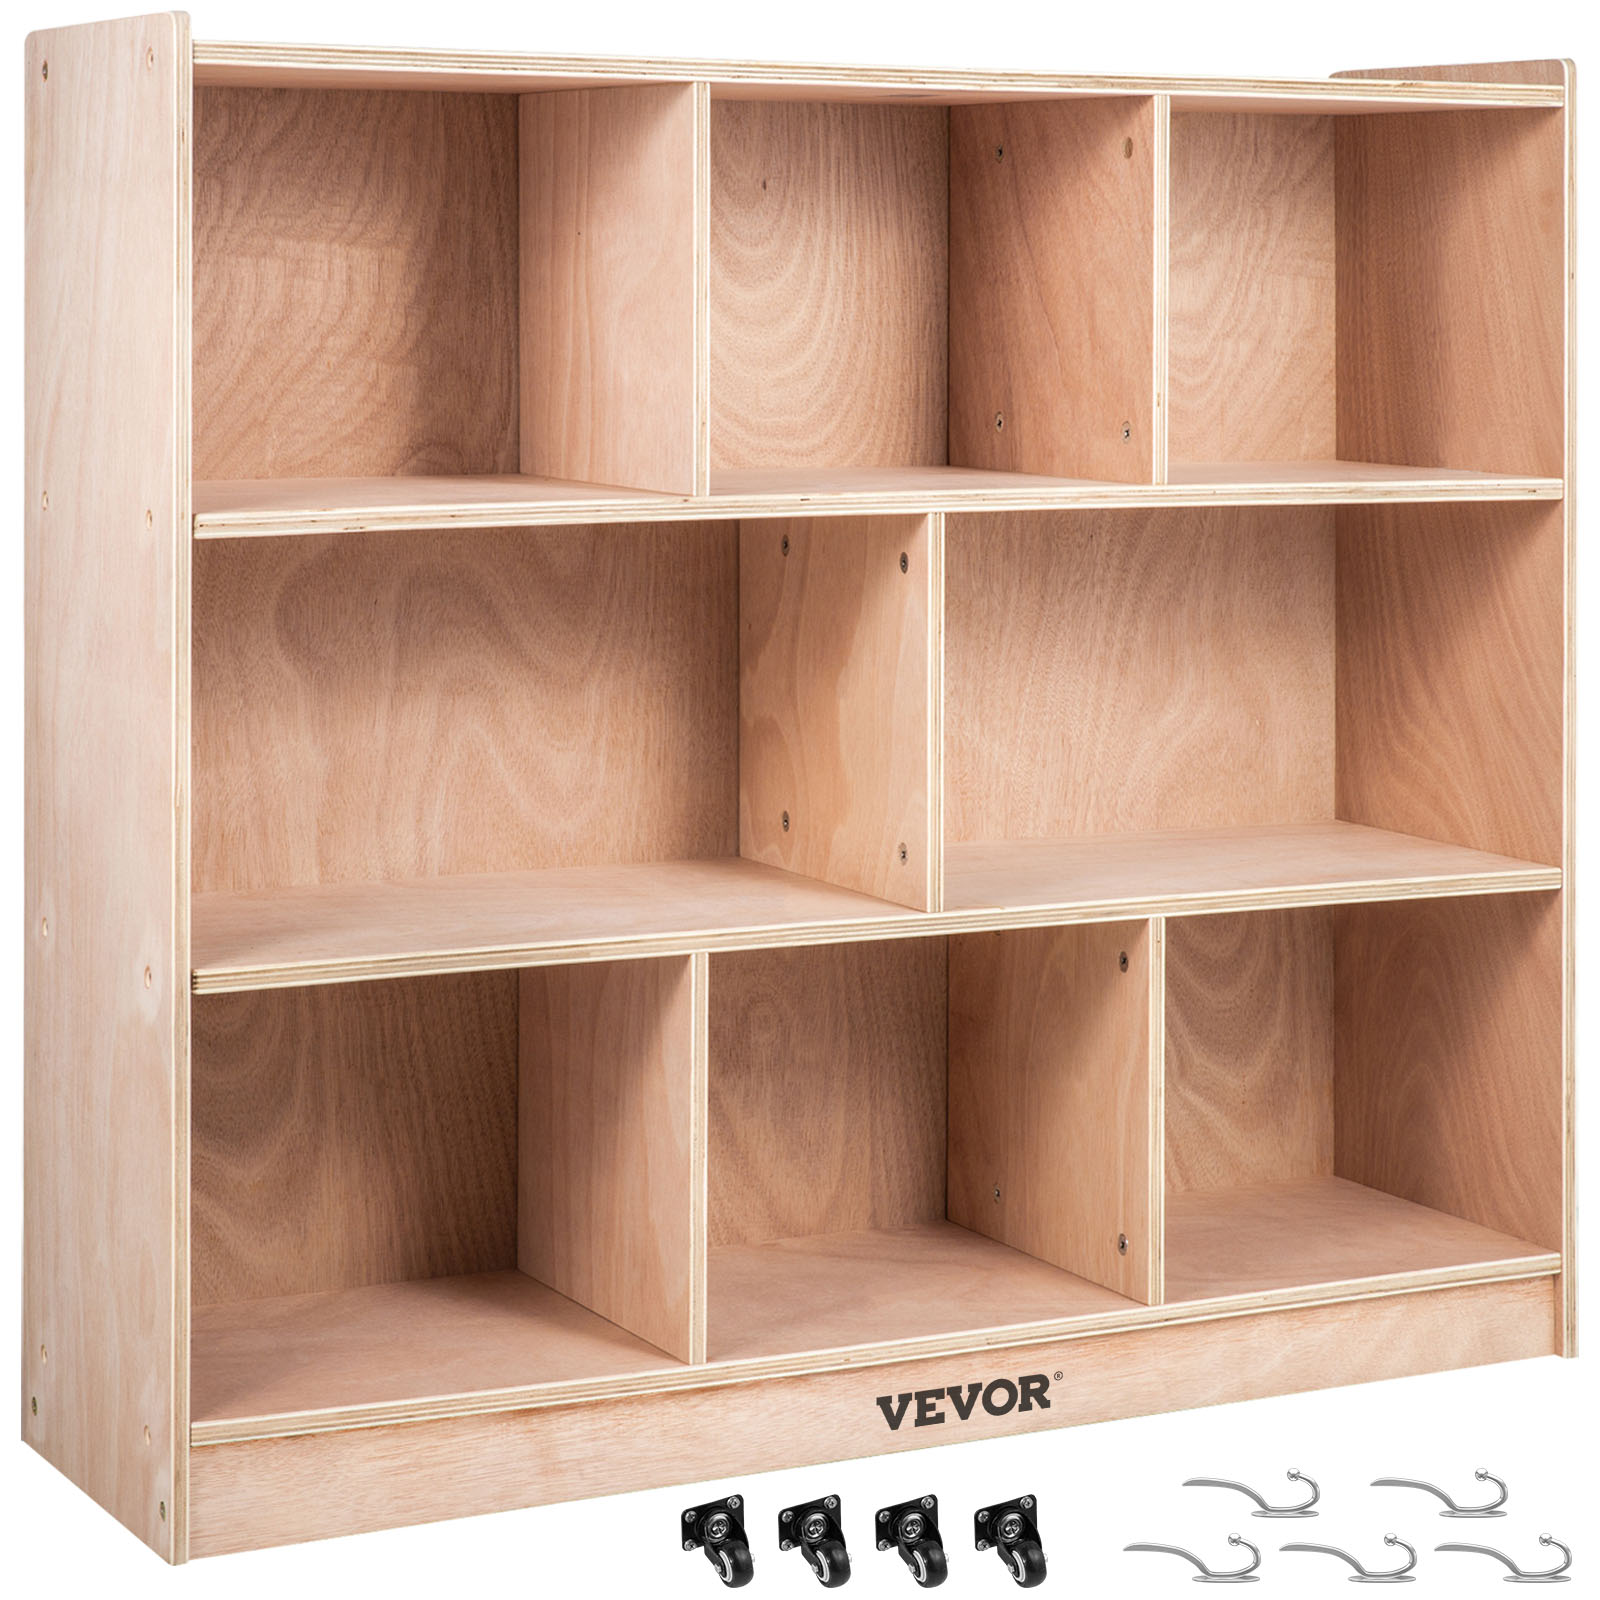 Classroom Storage Cabinet Preschool Storage Shelves Wooden 8 Grids Toys Books от Vevor Many GEOs